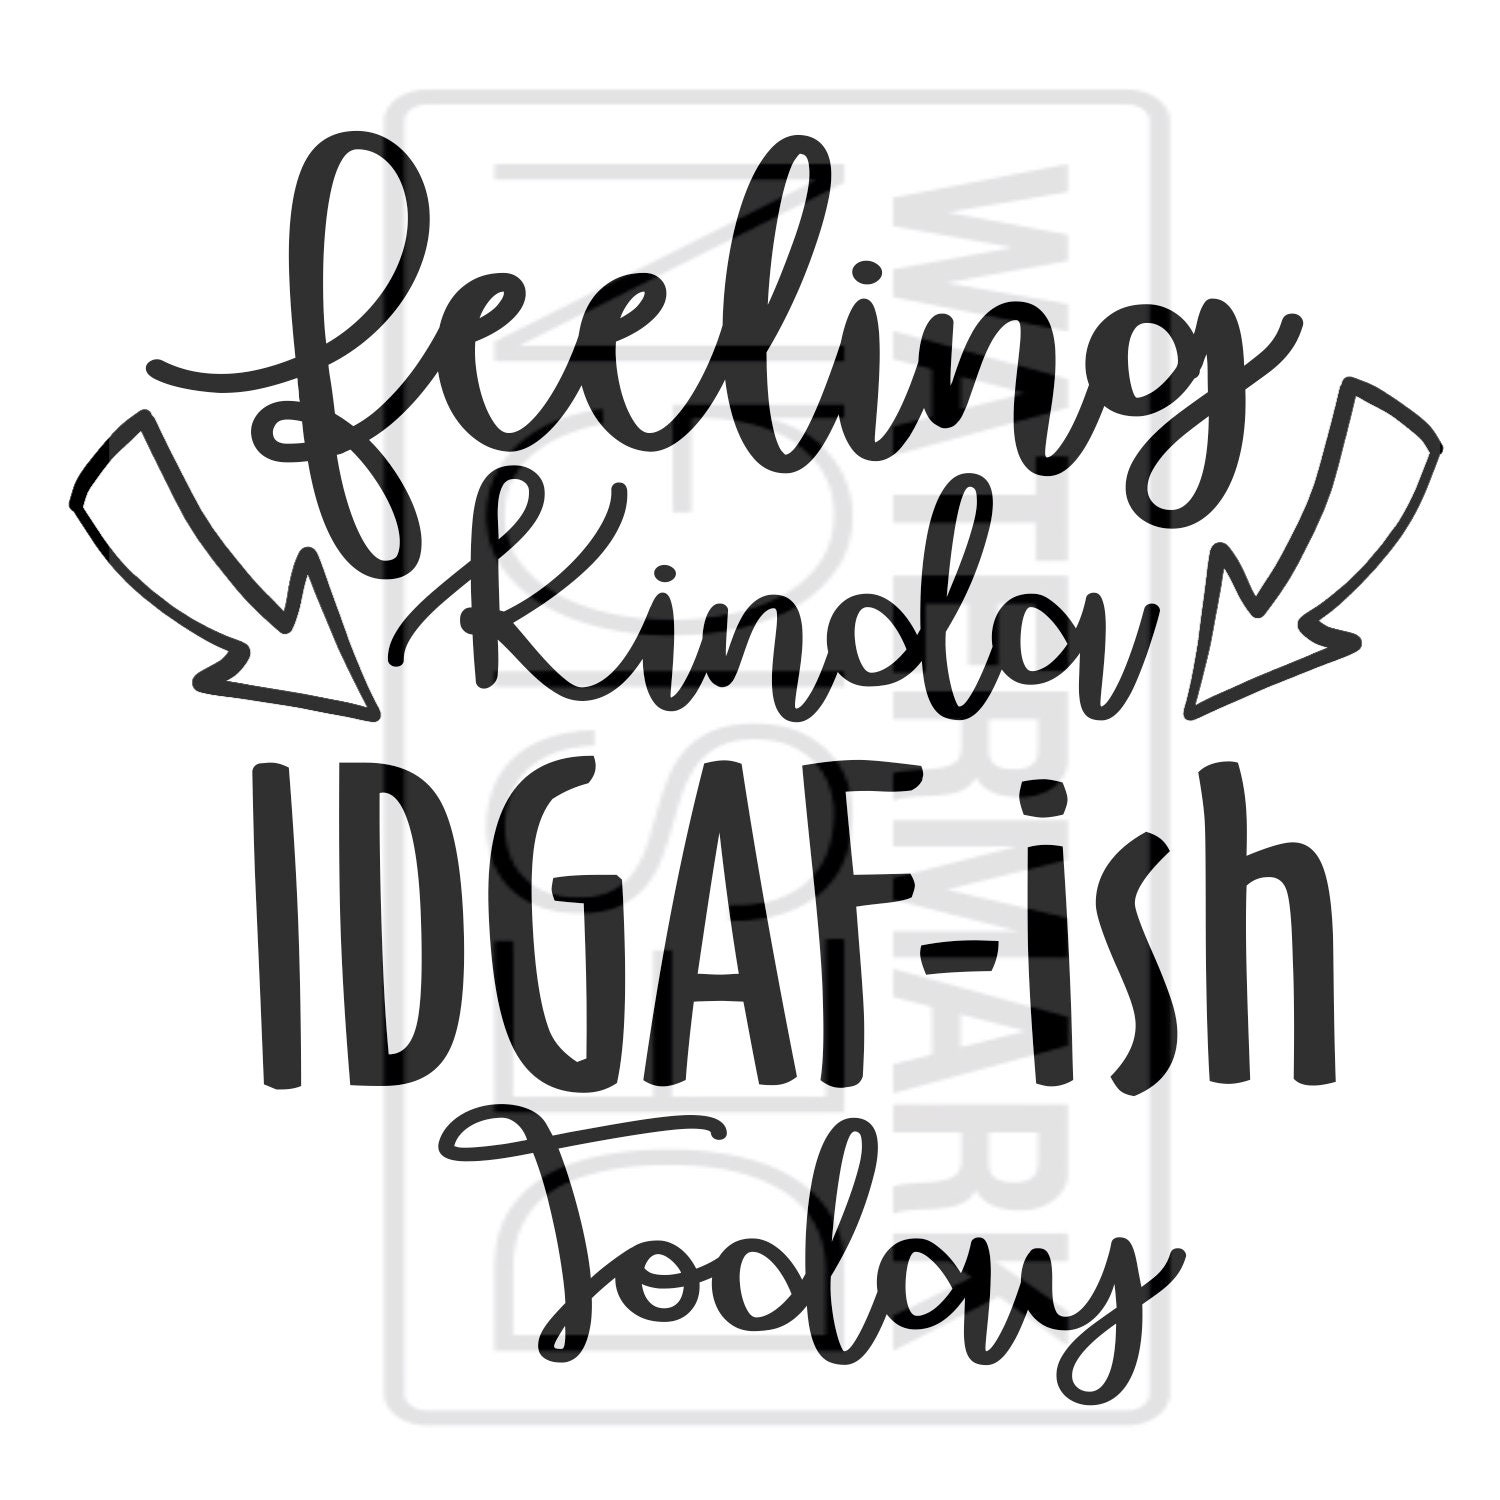 Download Feeling Kinda idgaf-ish Today Instant Download Image Files ...